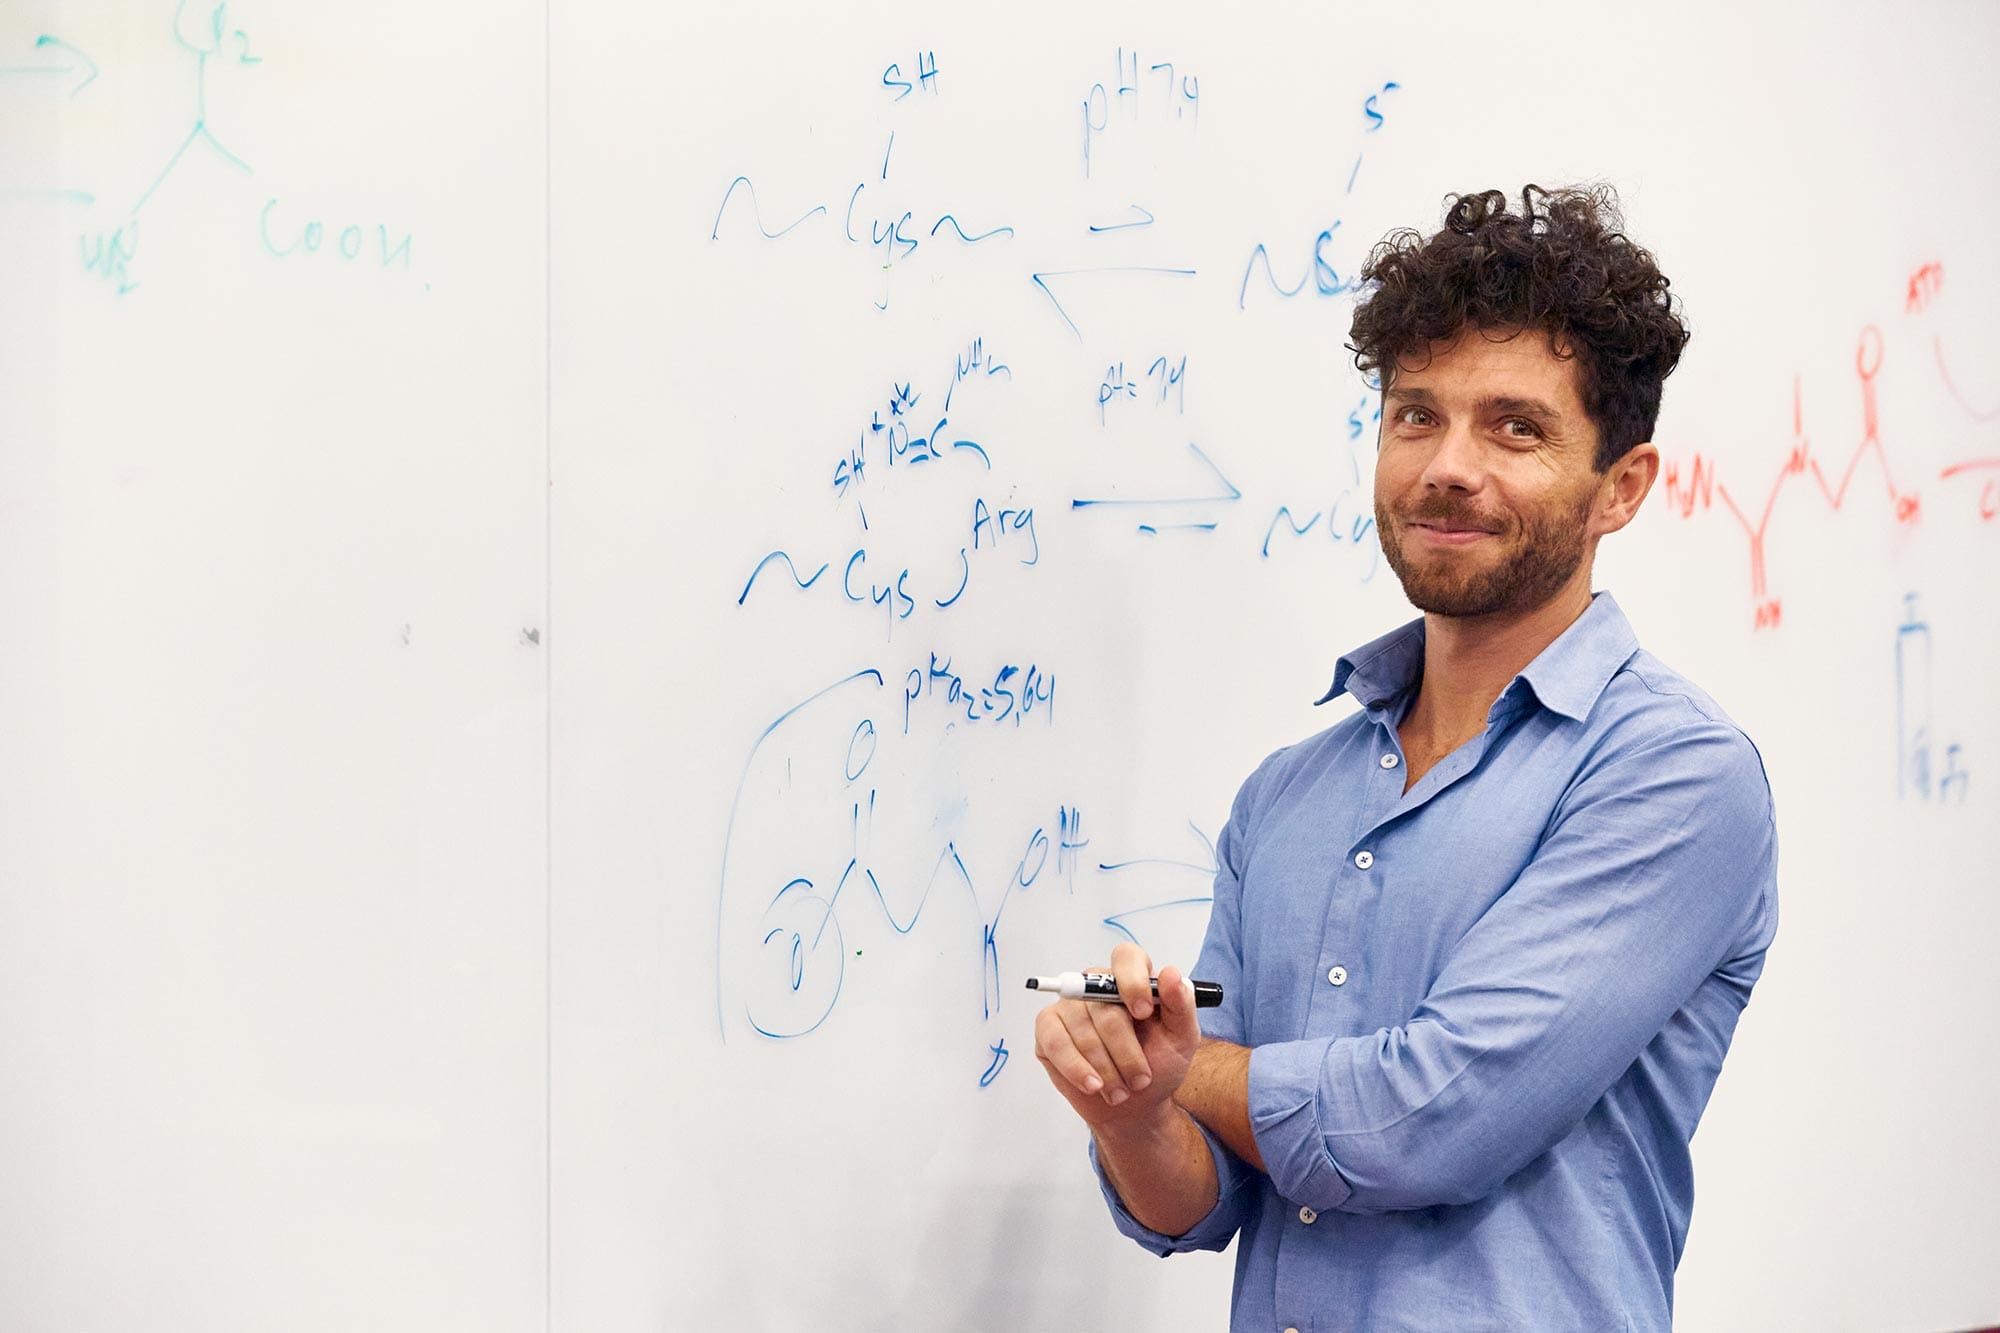 Edward Chouchani writing chemistry equations on a white board.